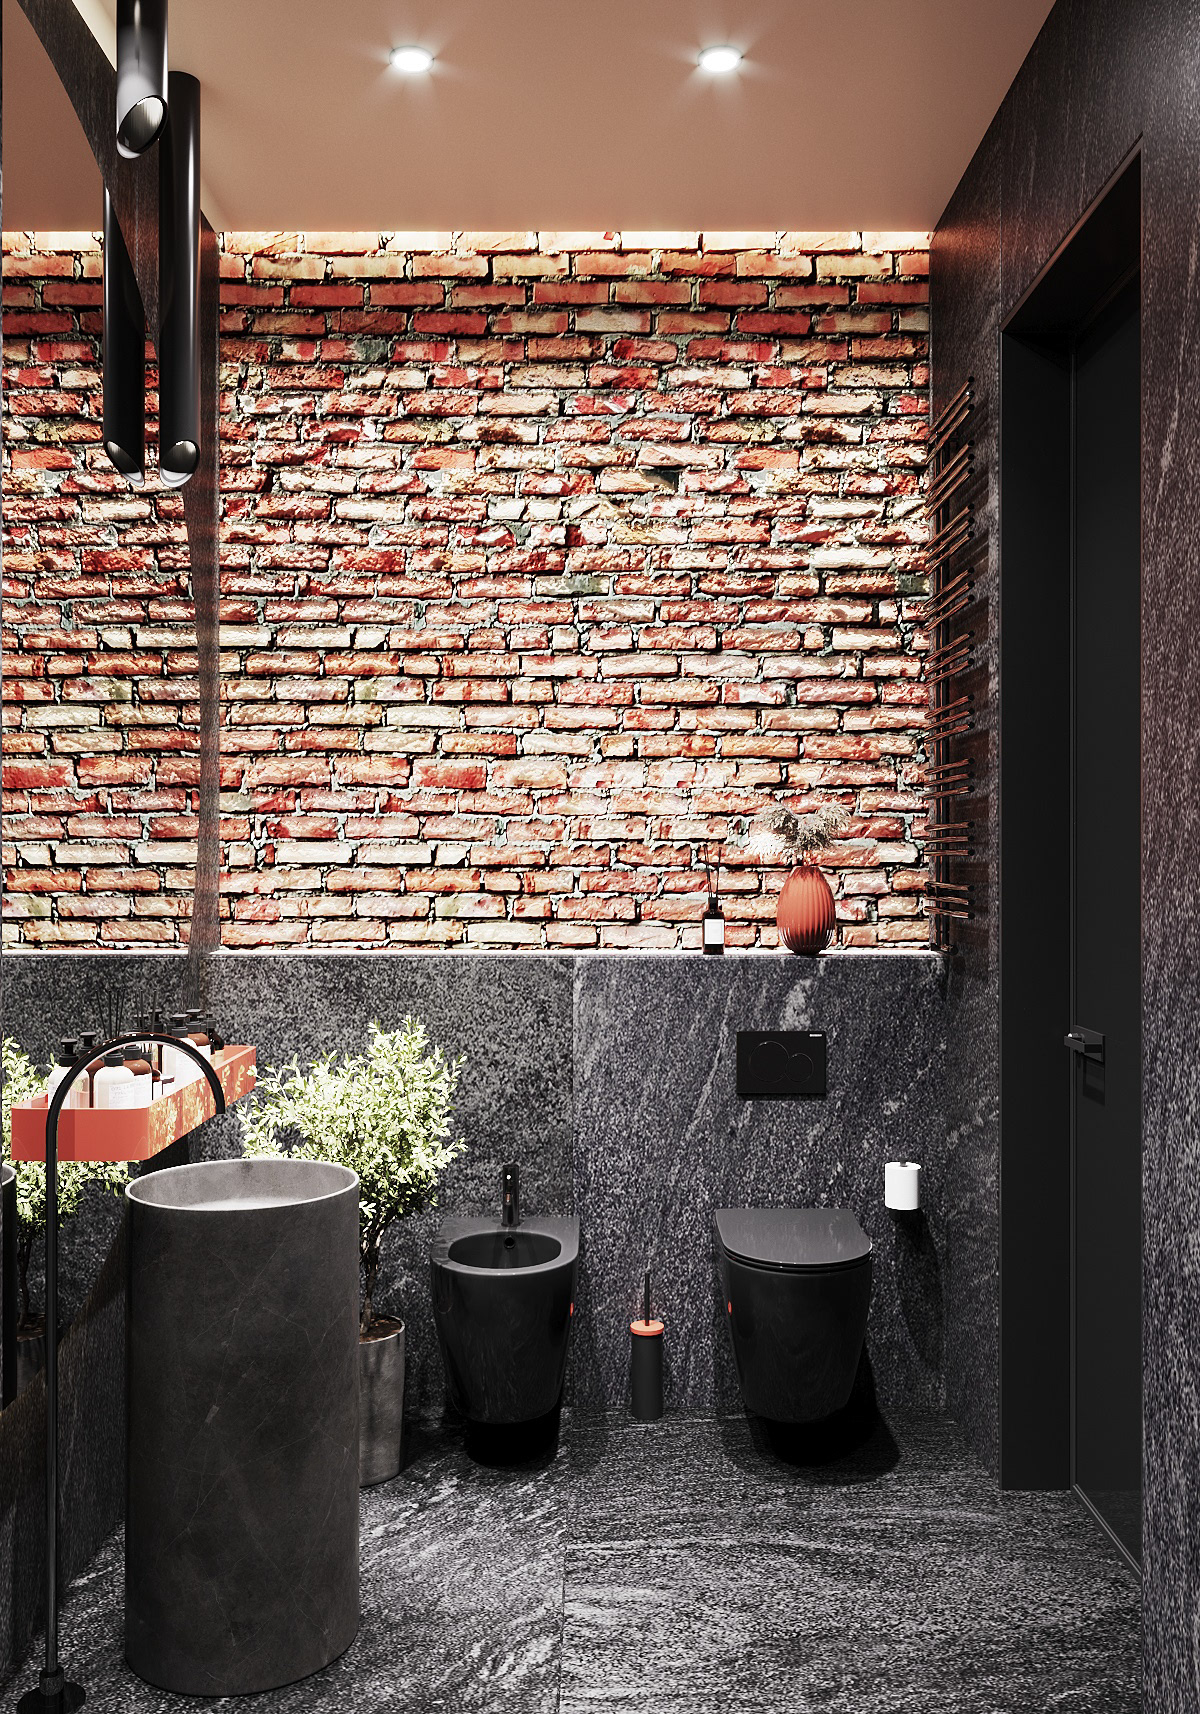 bathroom brick wall LOFT DESIGN Кирпичная стена лофт дизайн санузел интерьер тропический душ